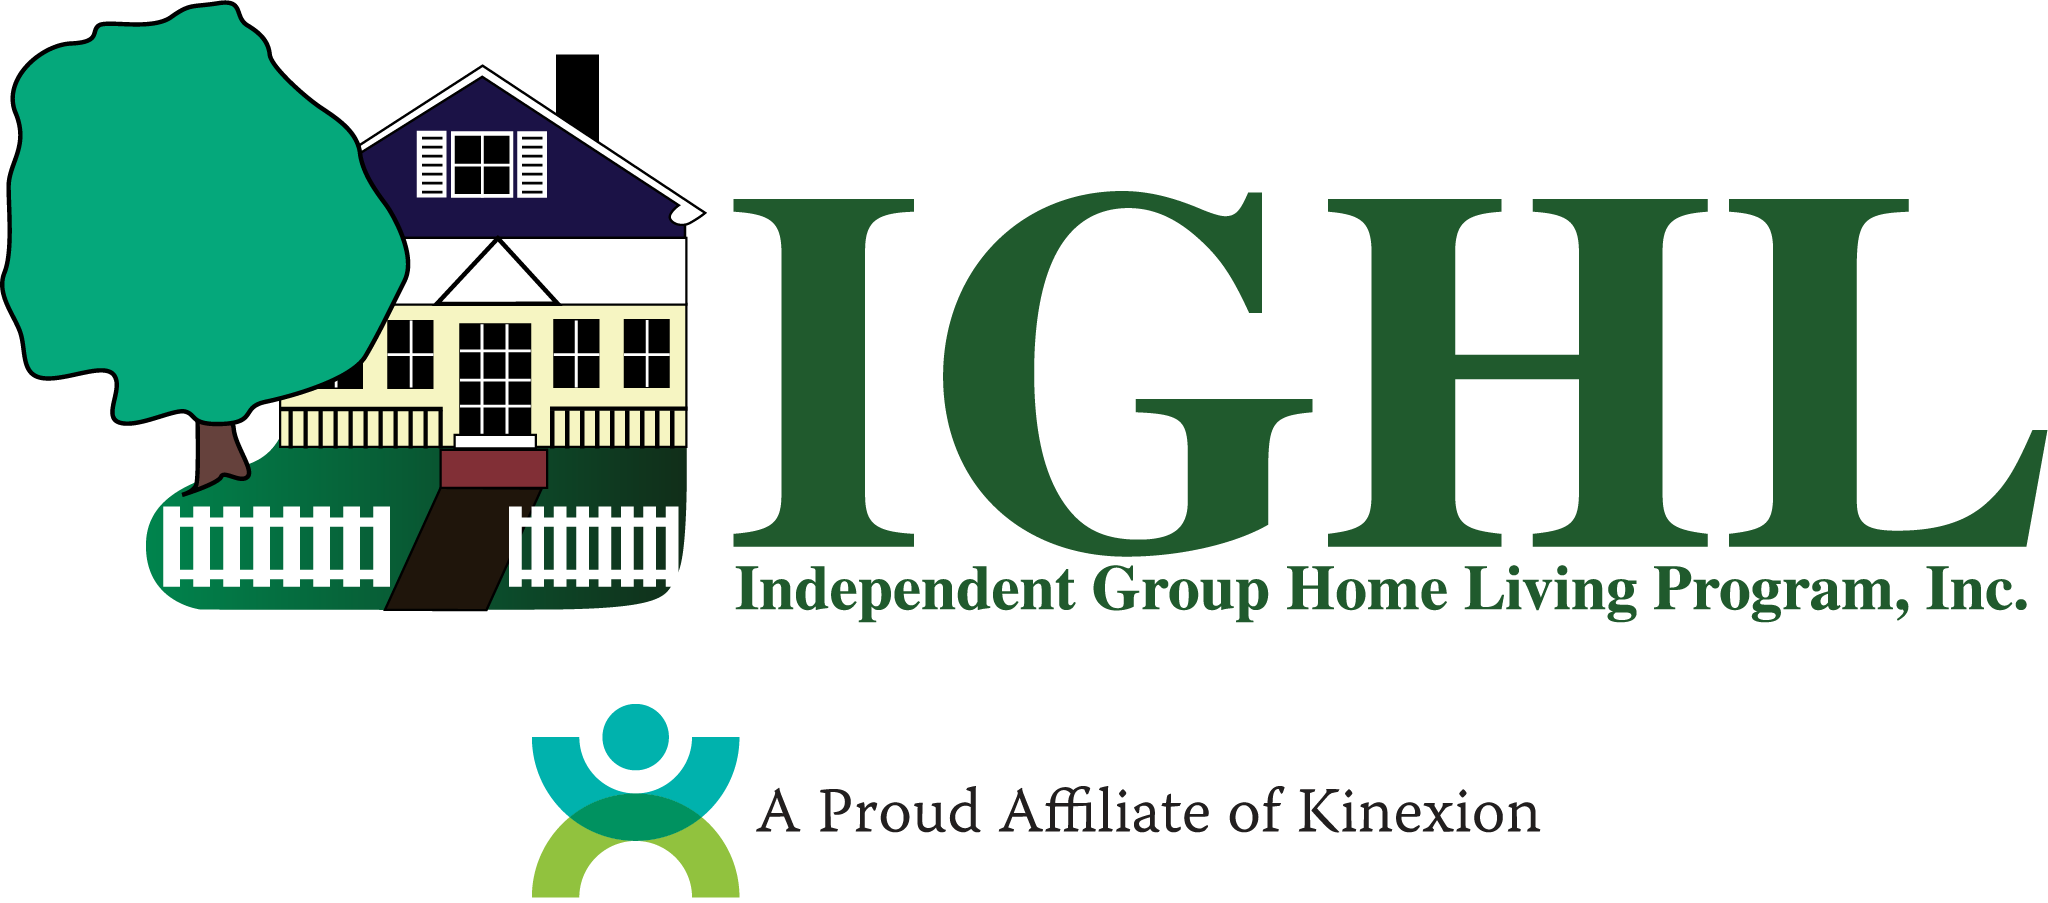 ighl logo